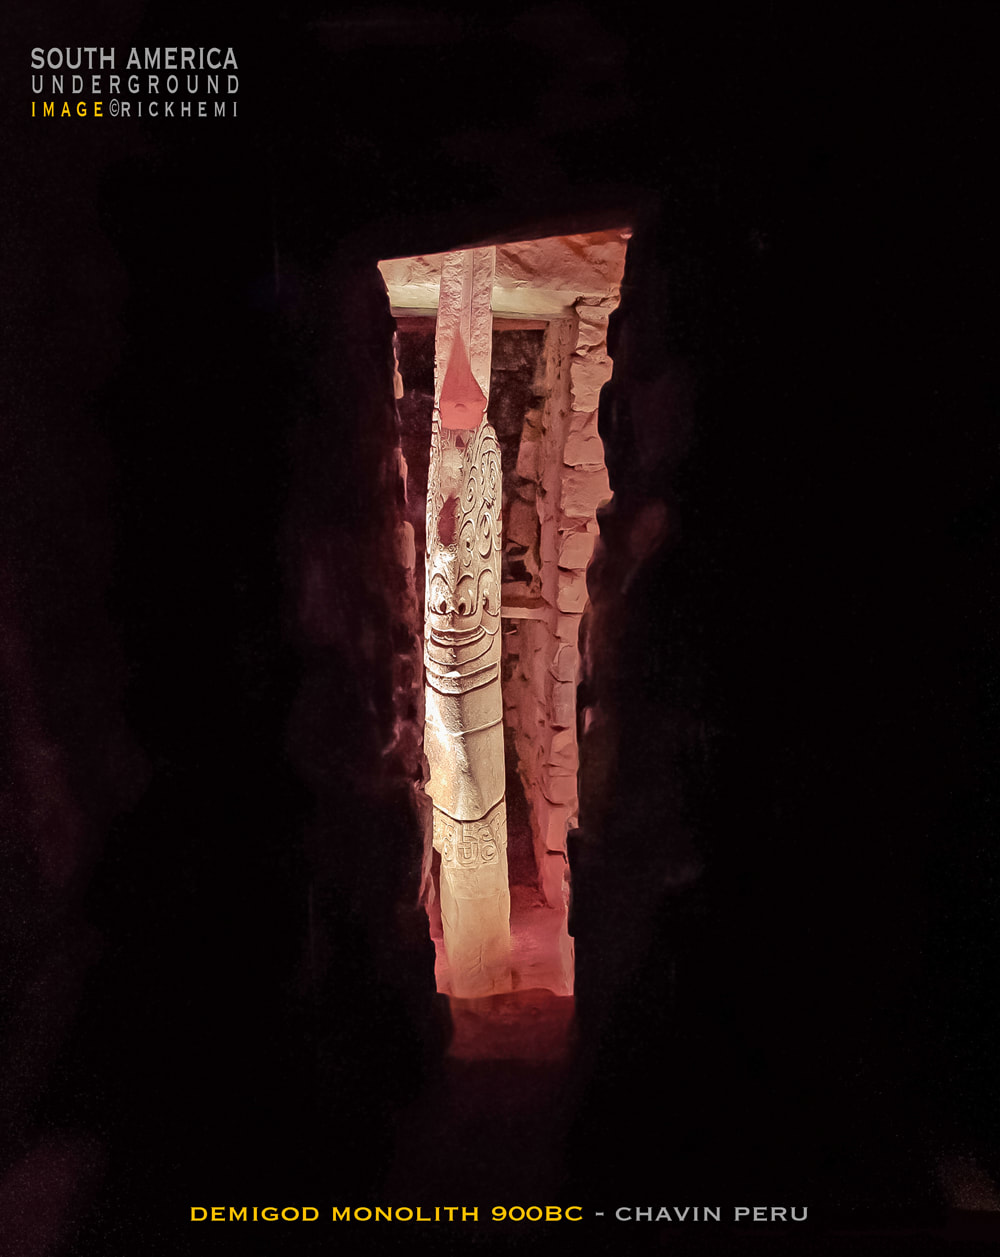 solo overland South America, underground monolith image by Rick Hemi